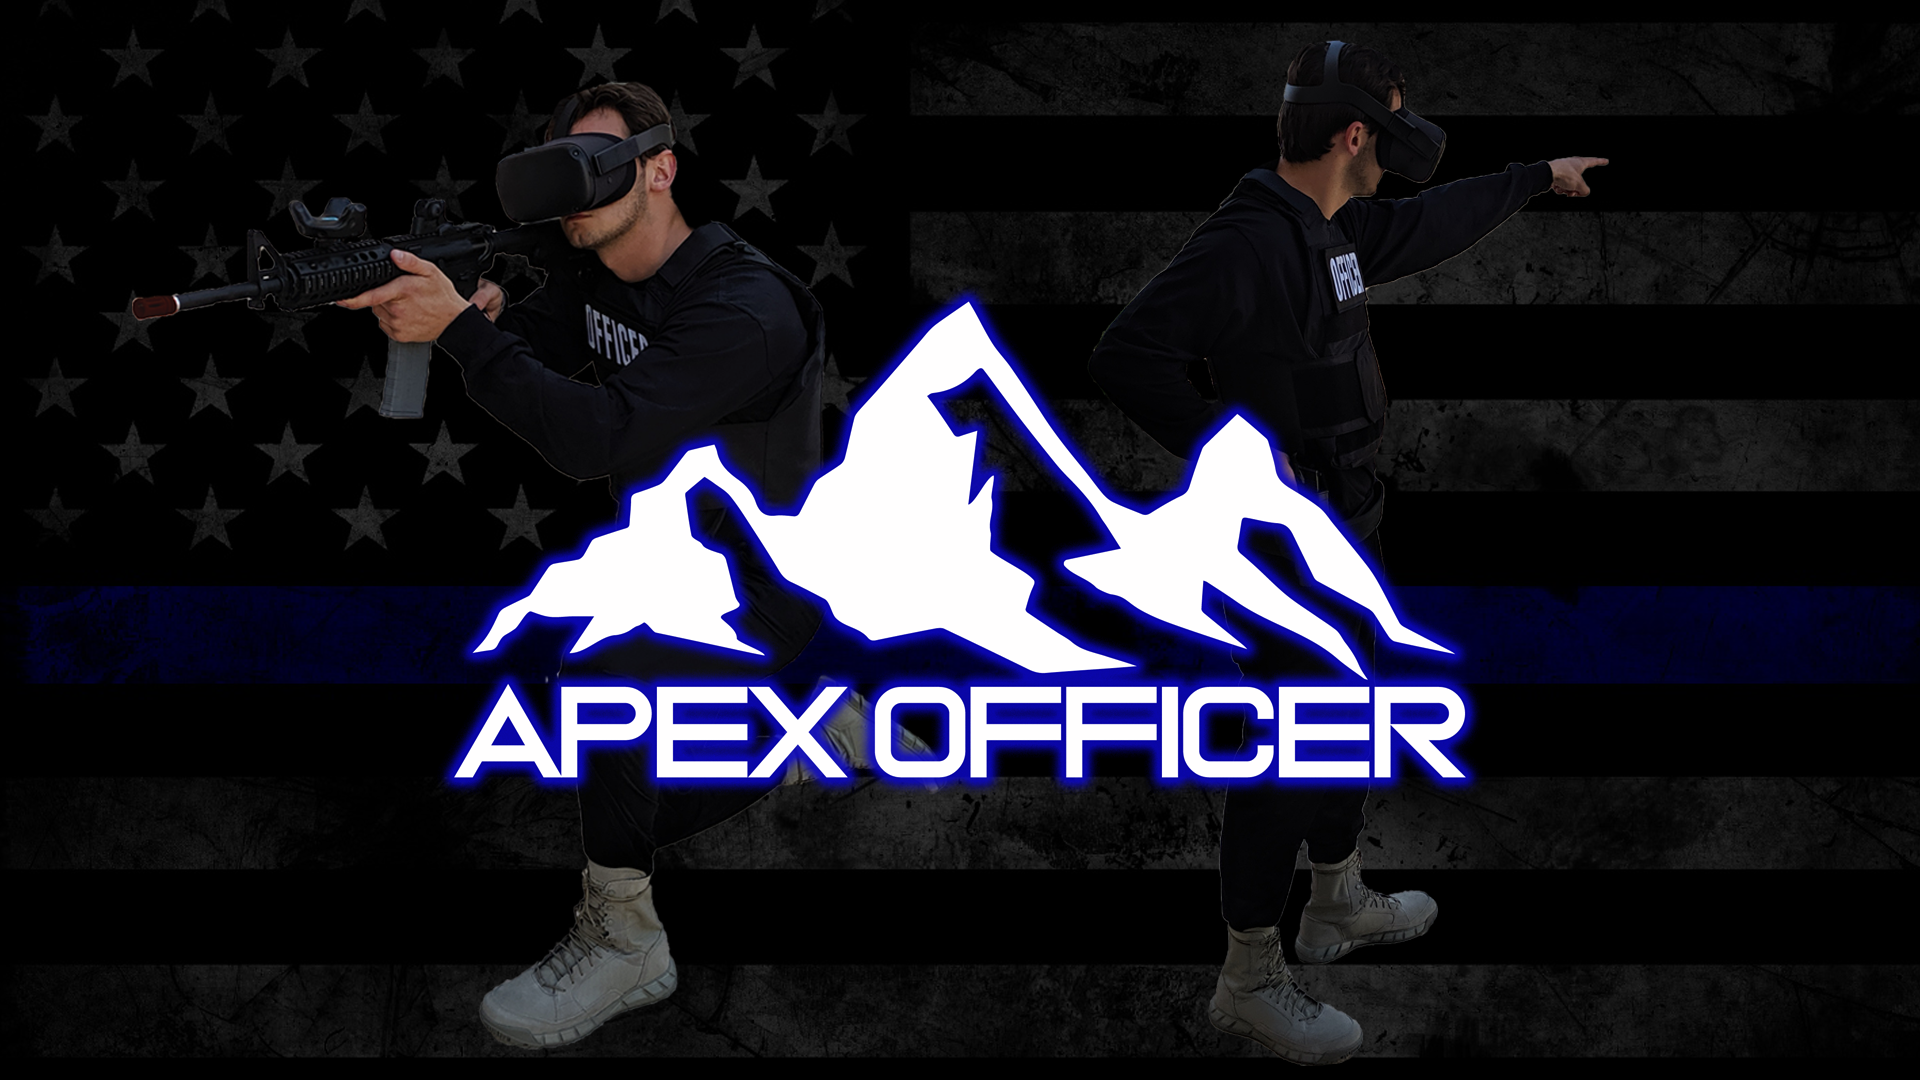 Apex Officer Active Shooter Training Program